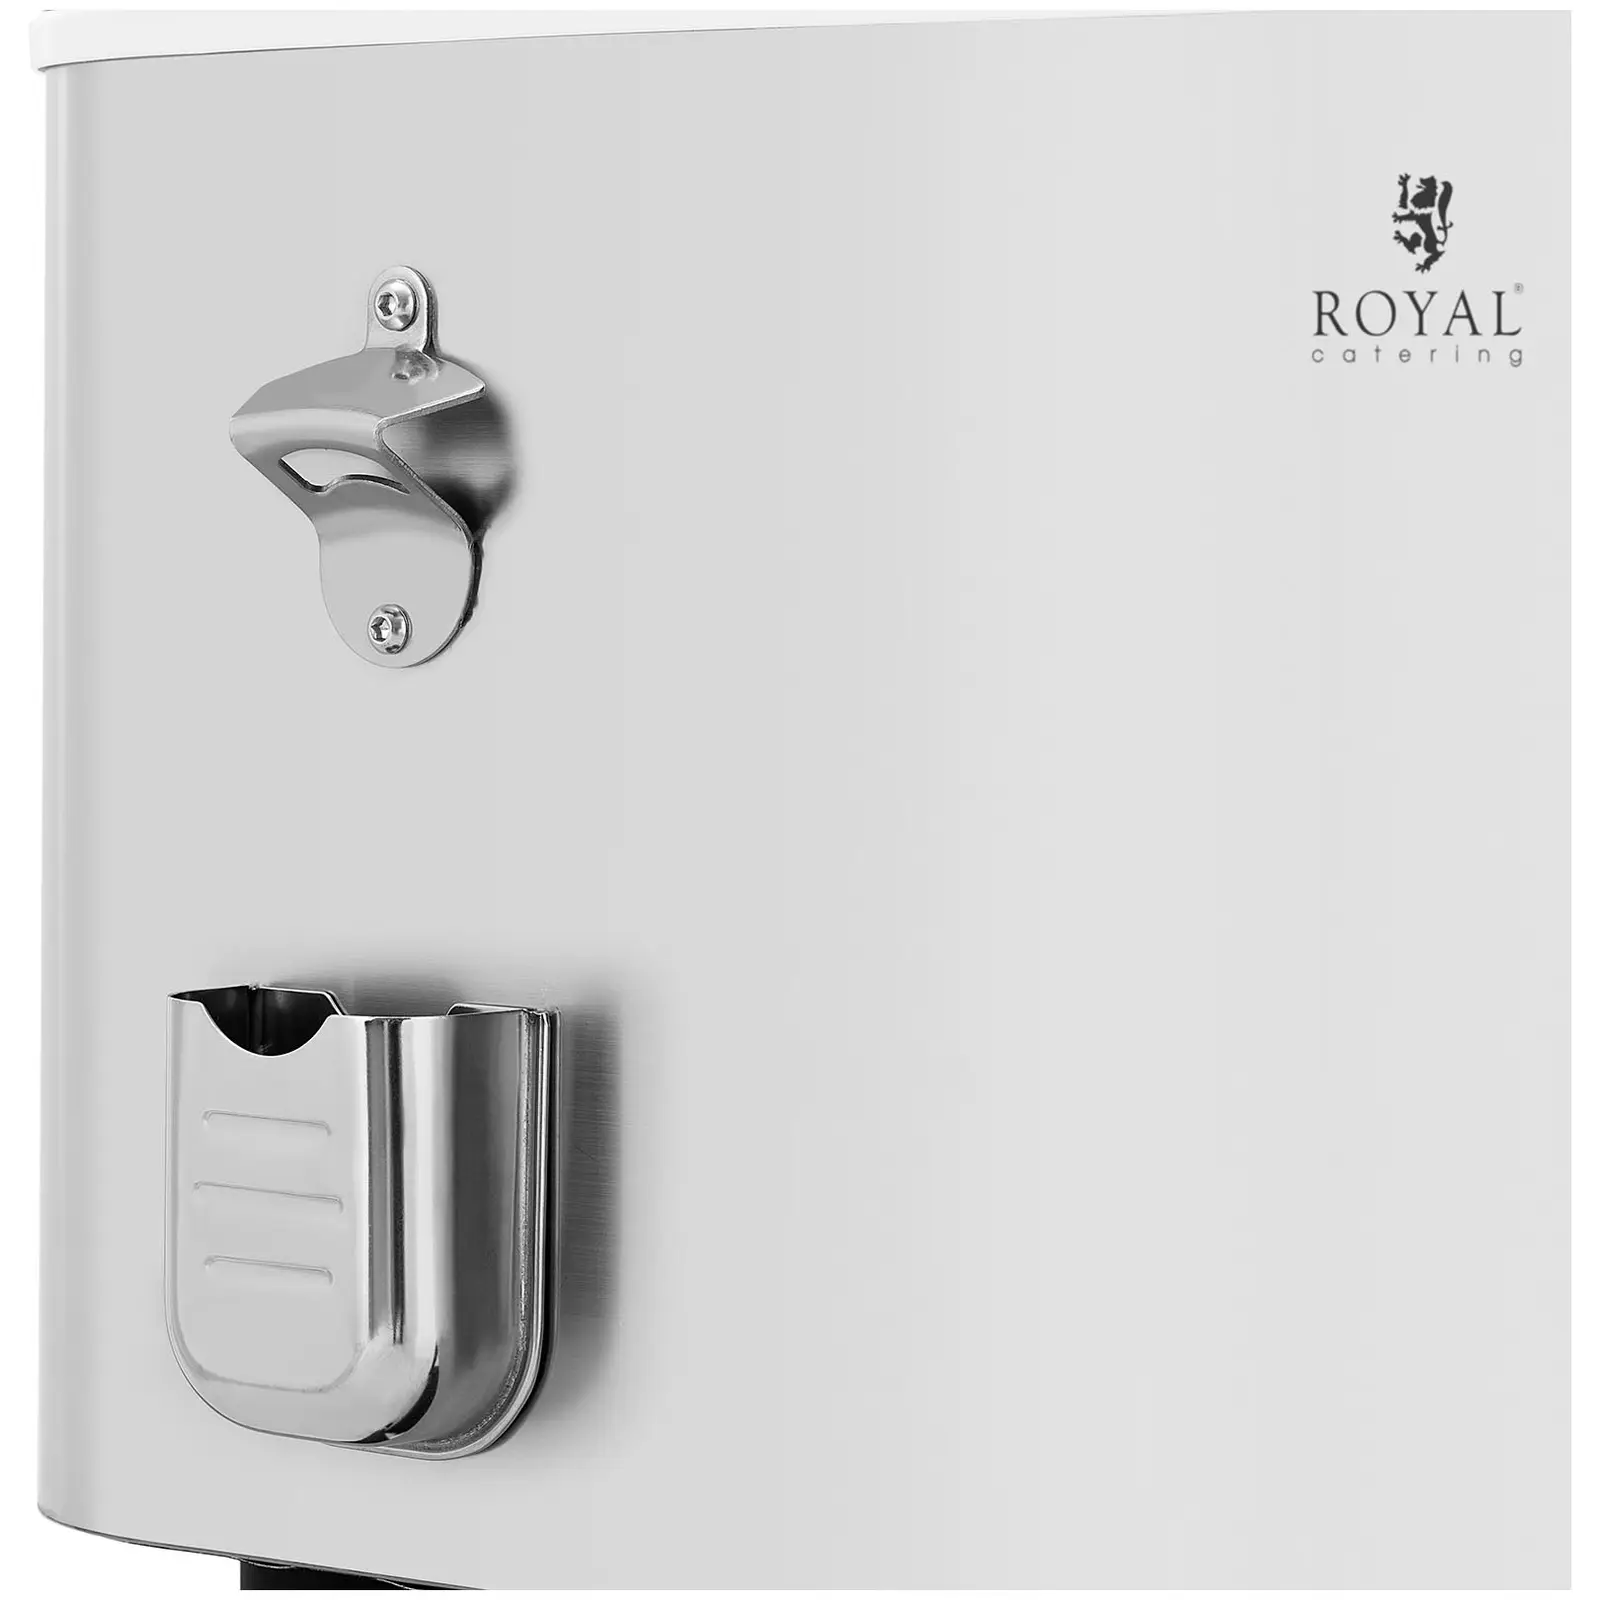 Kühlbox mit Fahrgestell - 61 L - Royal Catering